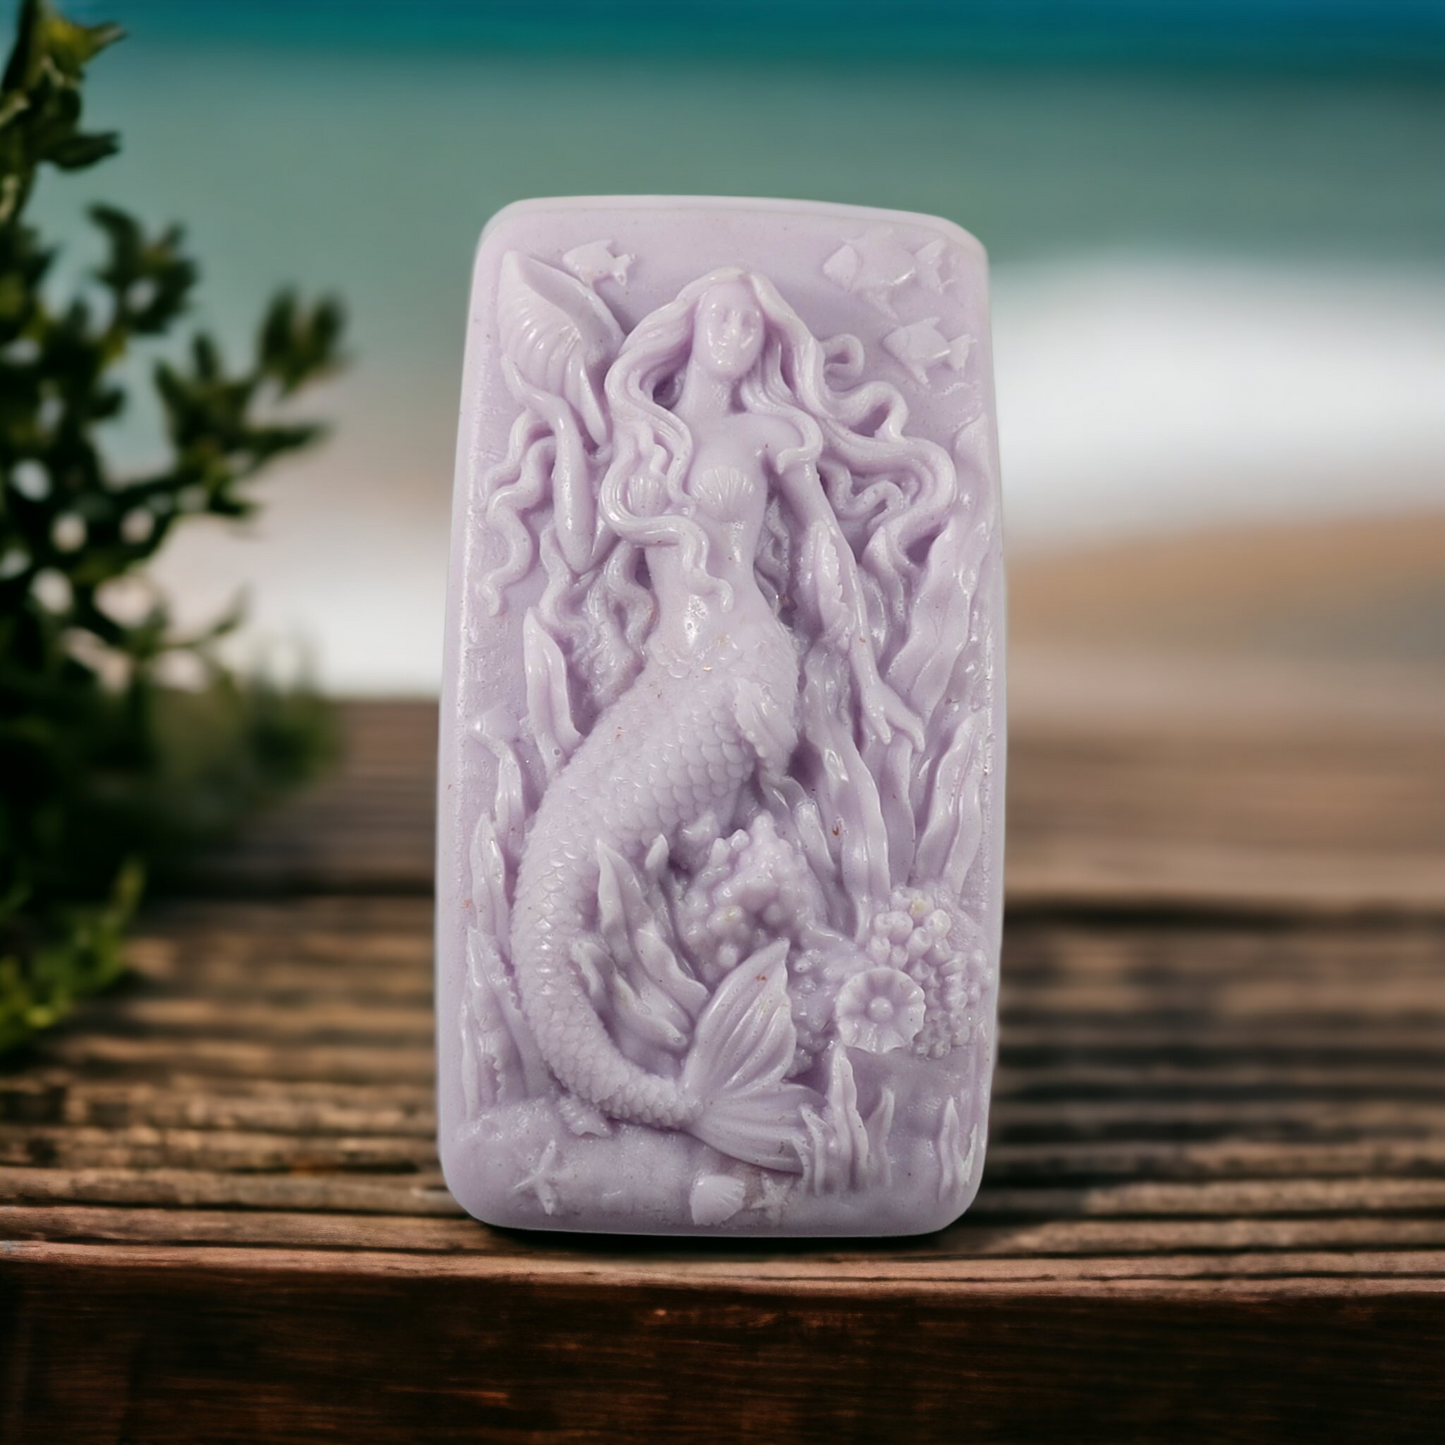 Mermaid Marvel Soap